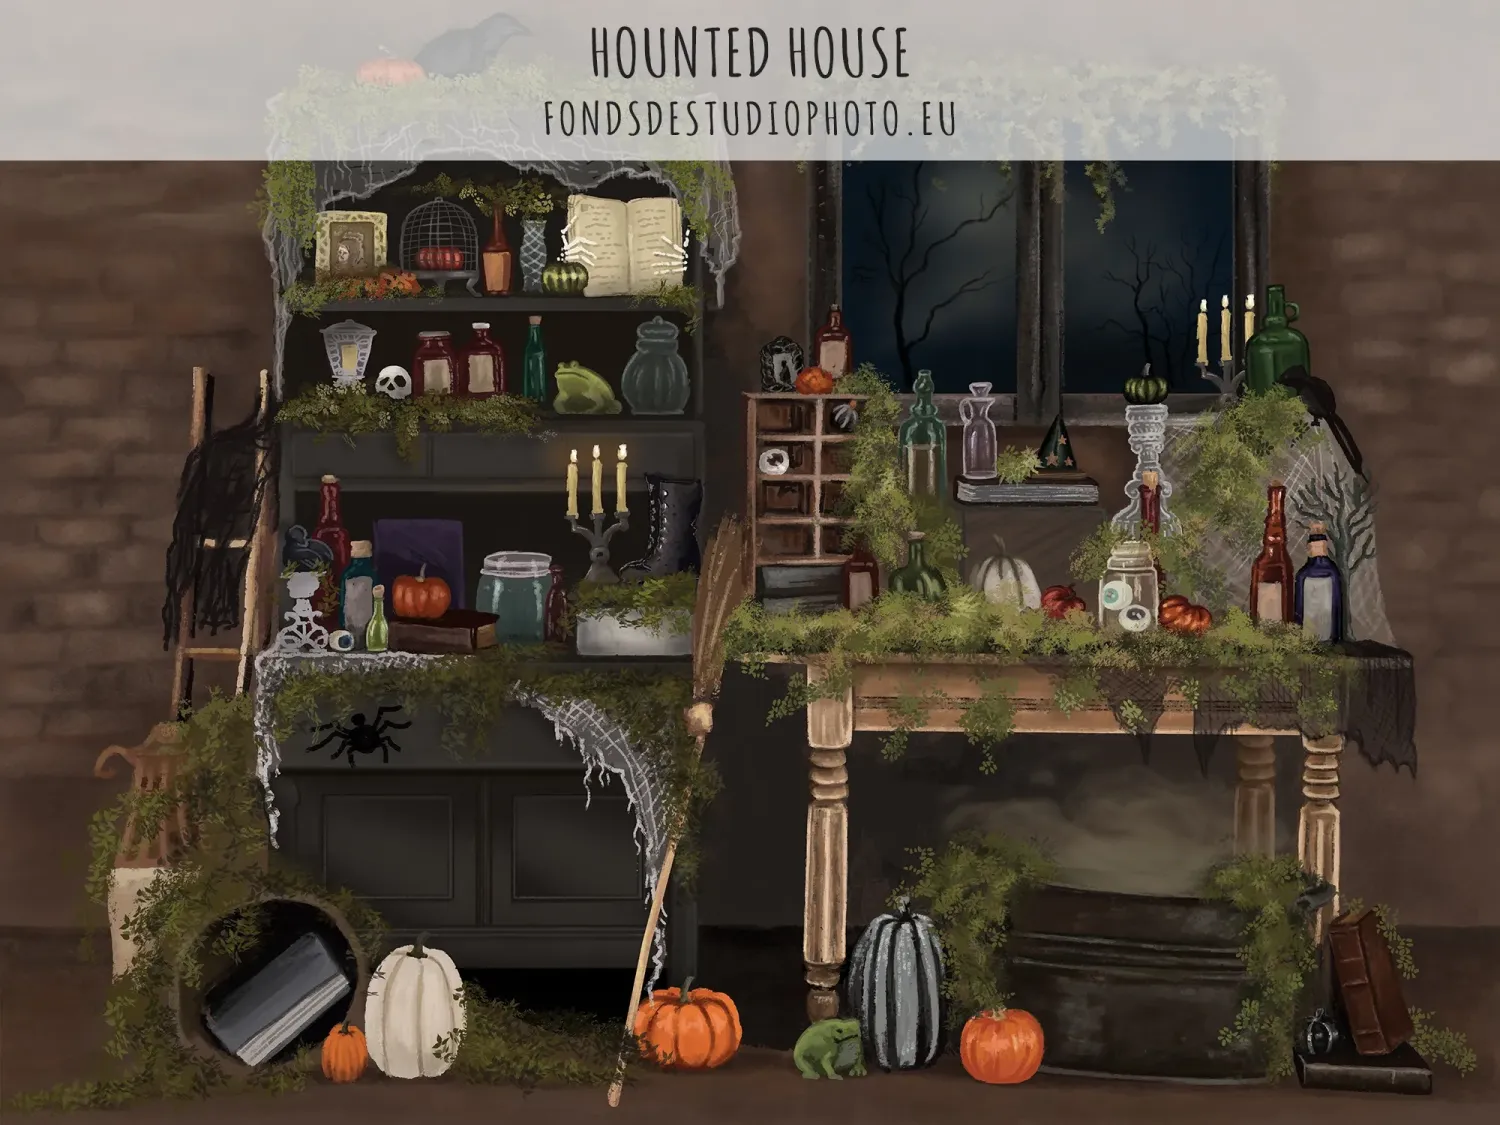 Hounted house